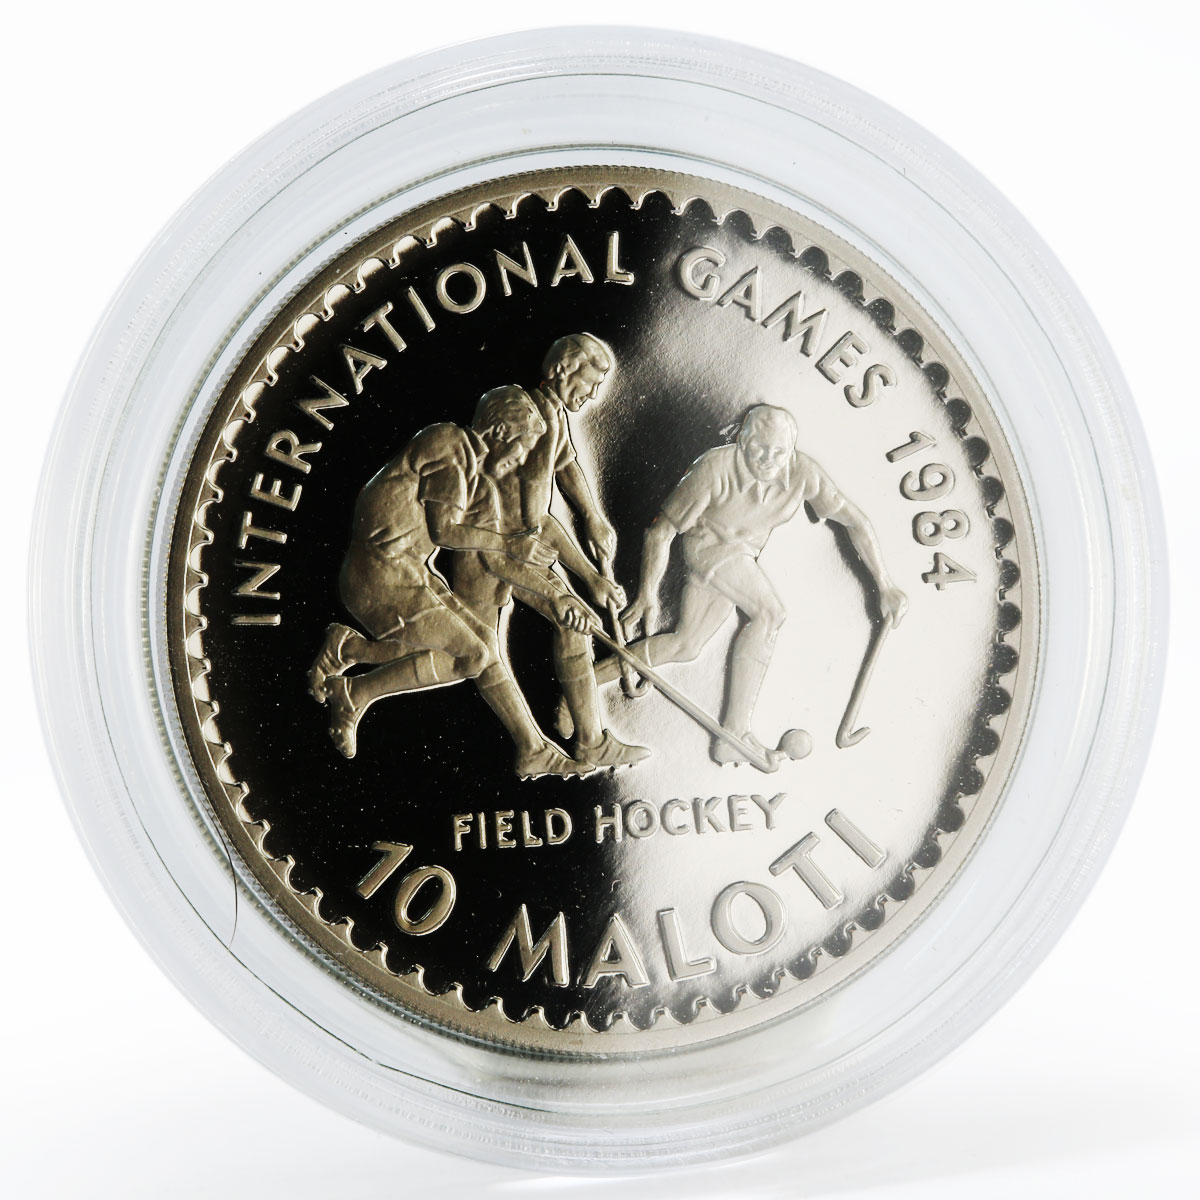 Lesotho 10 maloti International Games Field Hockey proof nickel coin 1984